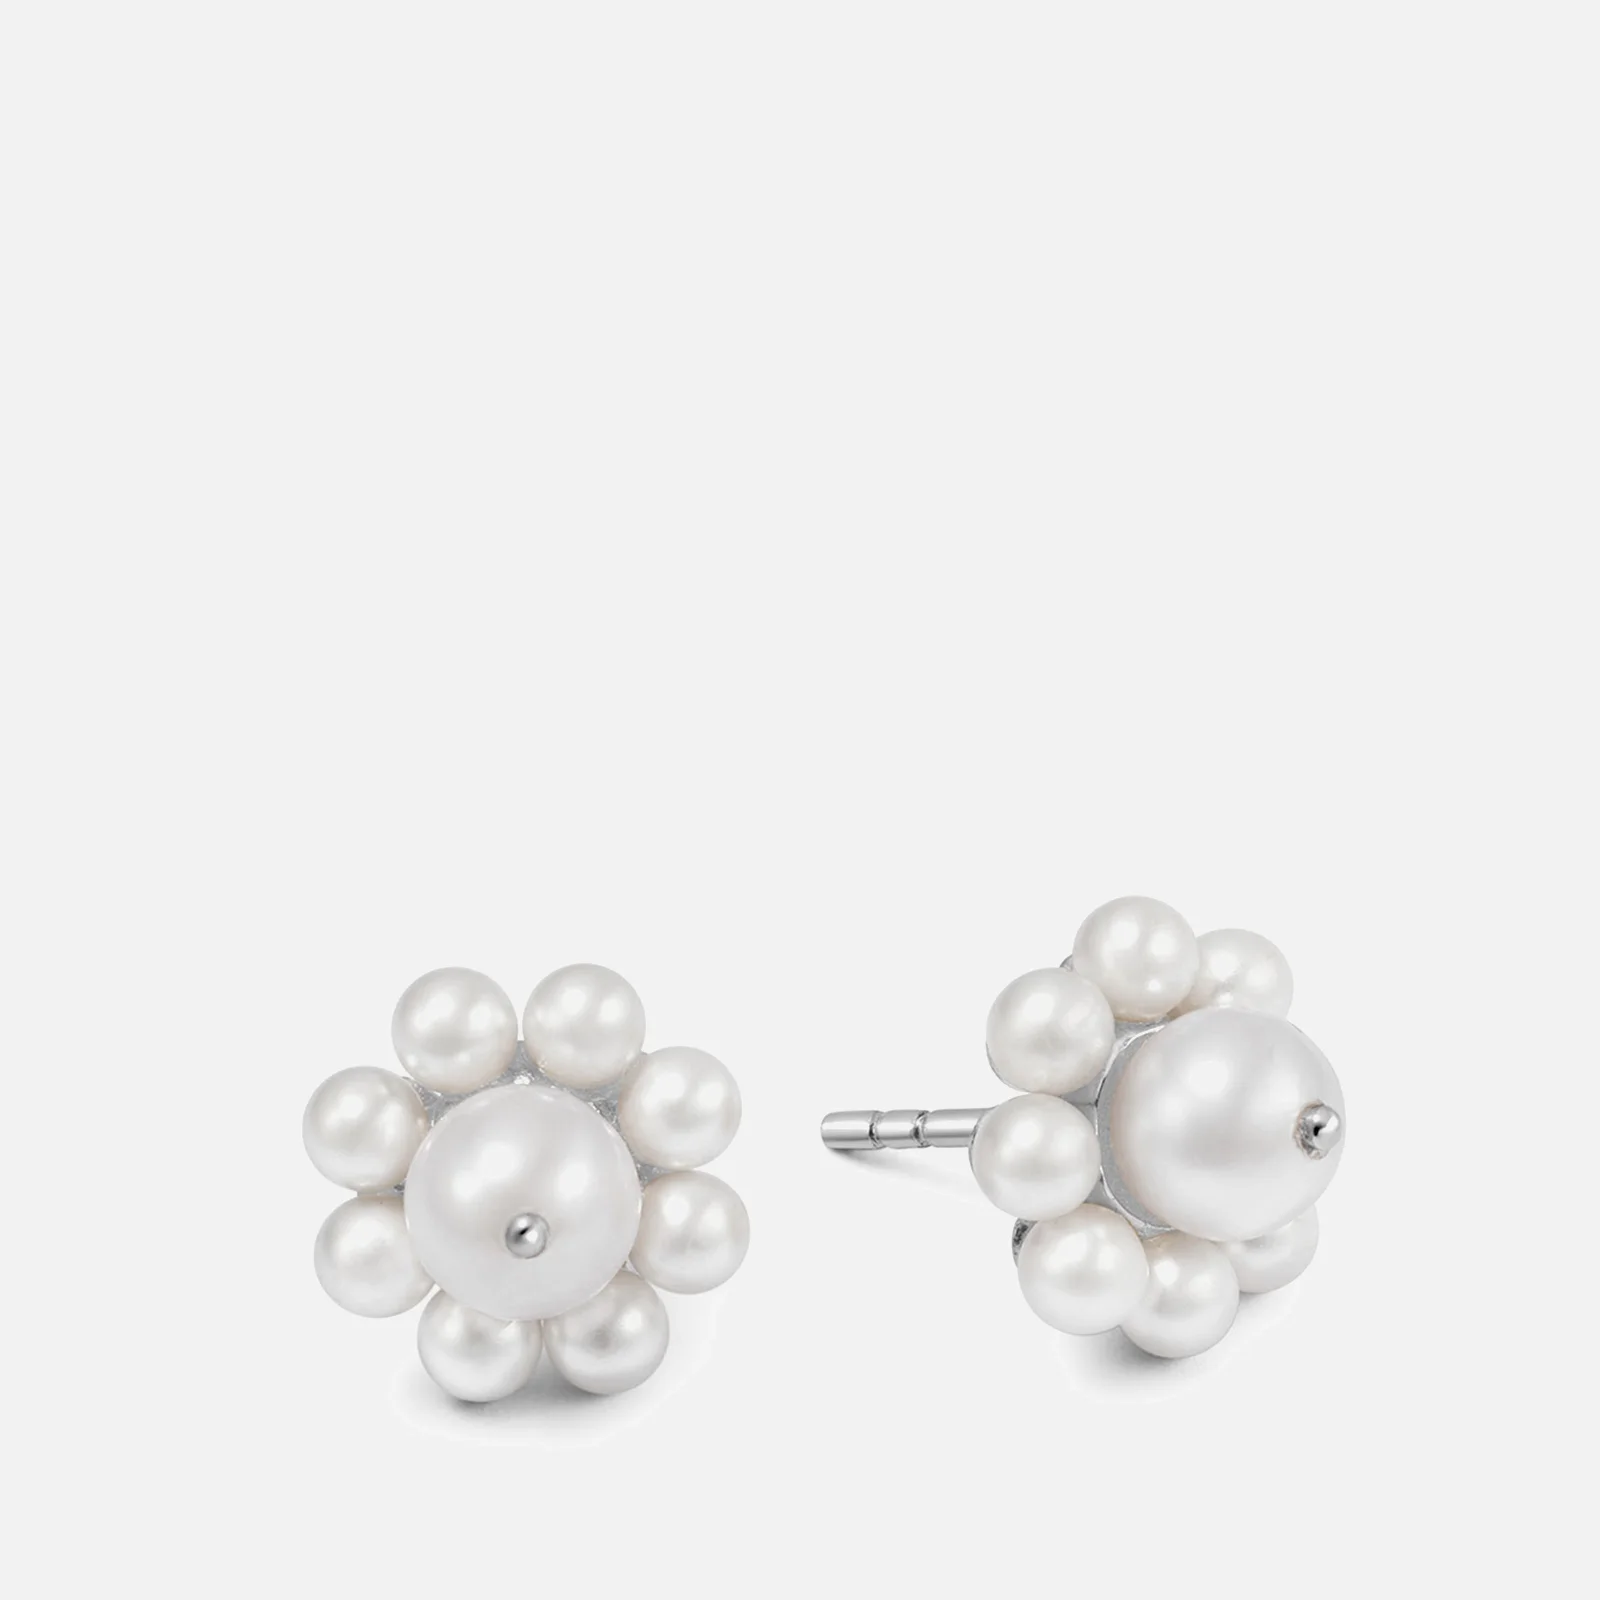 Daisy London X Shrimps Pearl Sterling Silver Earrings Image 1